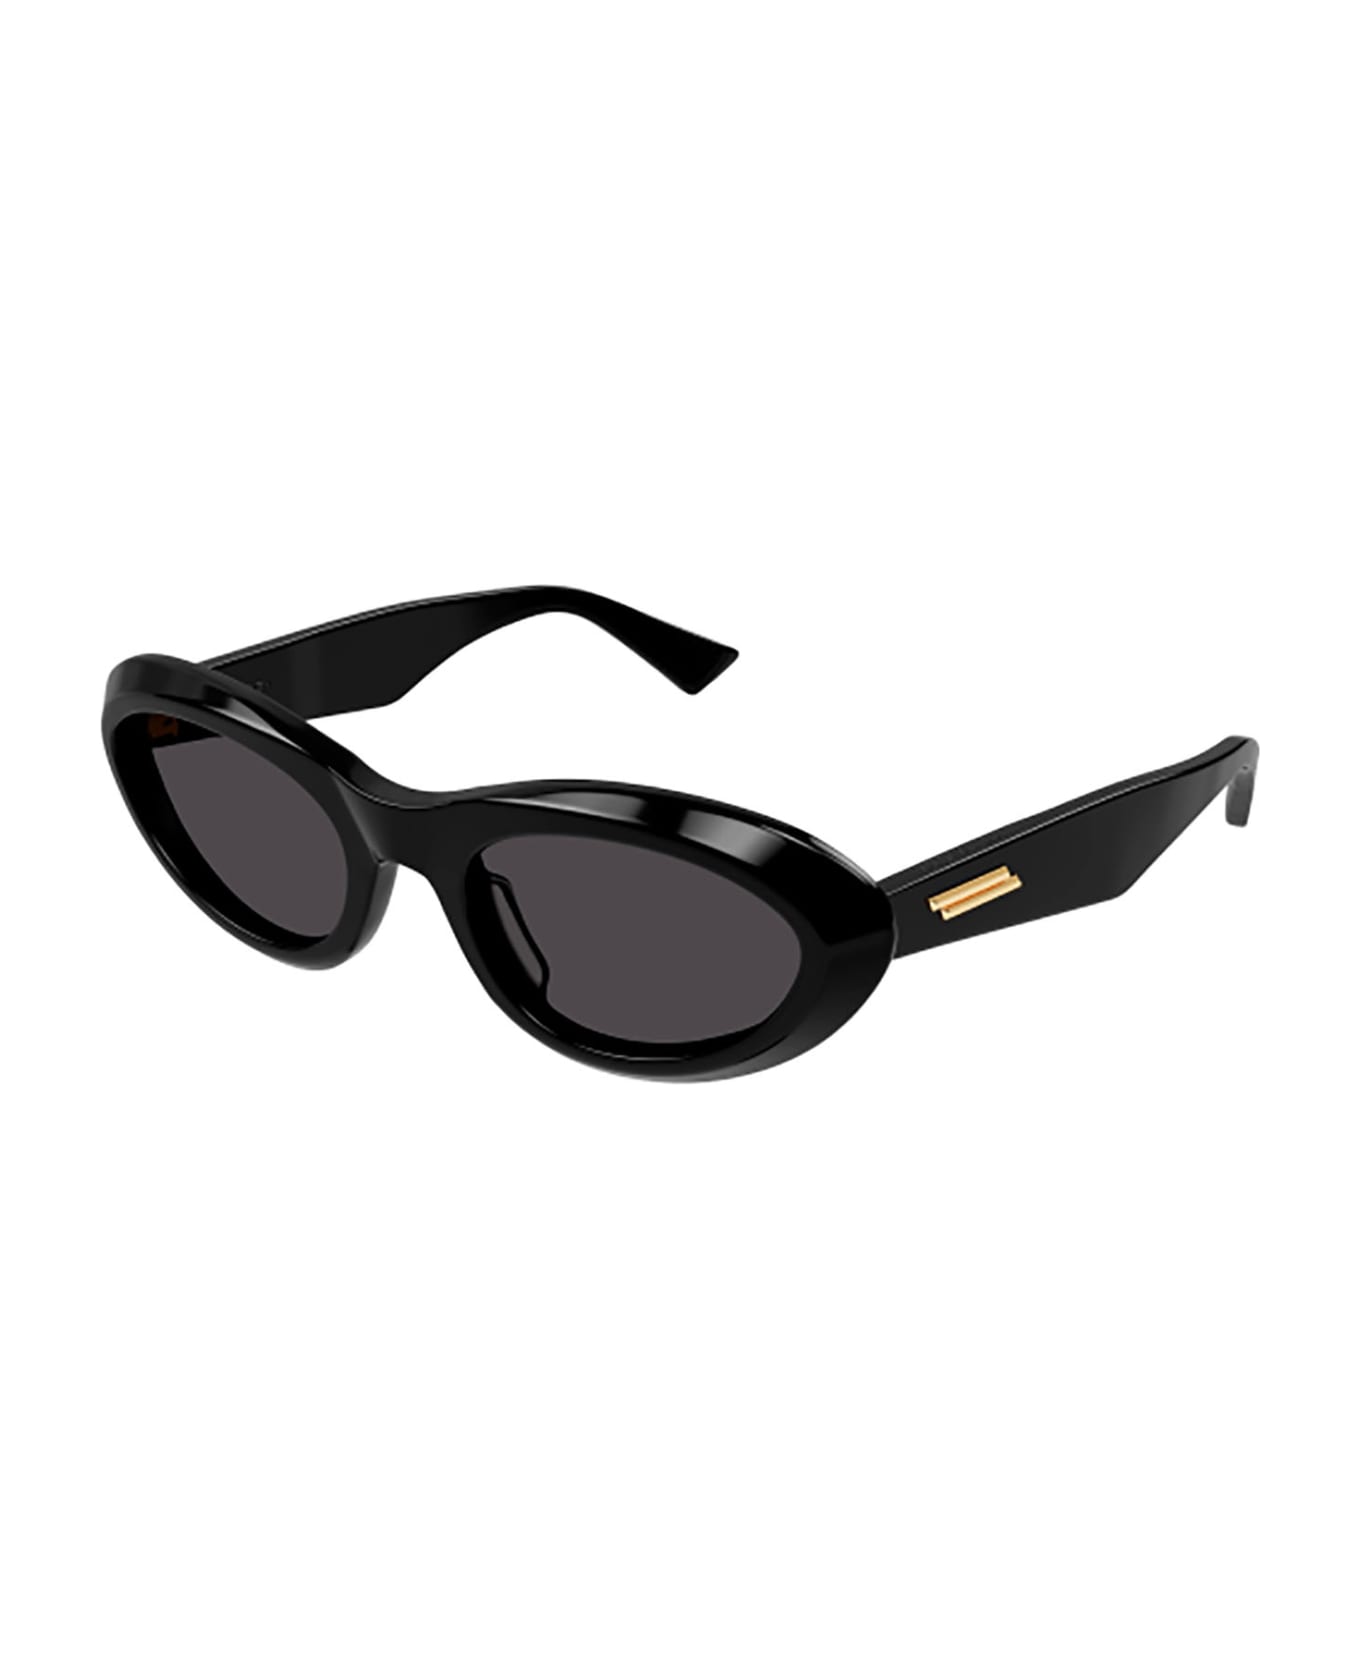 Bottega Veneta Eyewear 1egg4jb0a - Sunglasses OO9384 938406